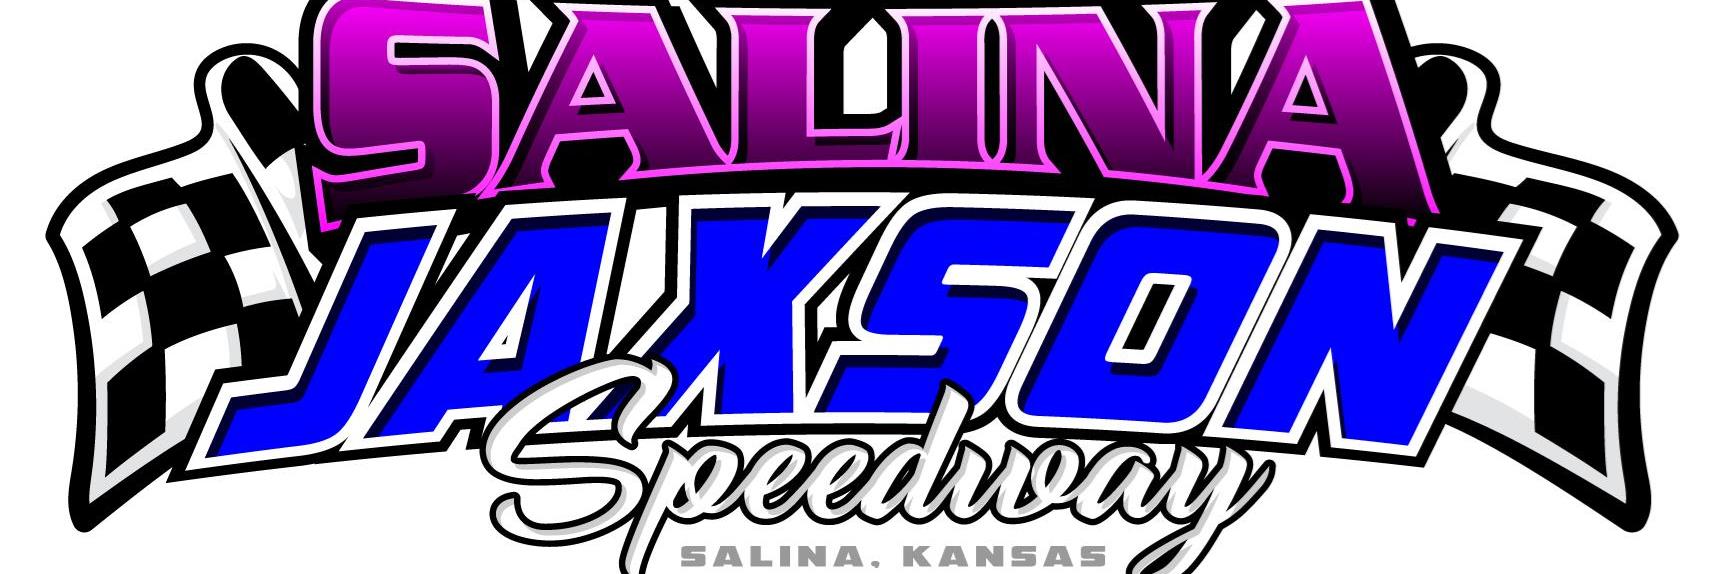 Salina Jaxson Speedway